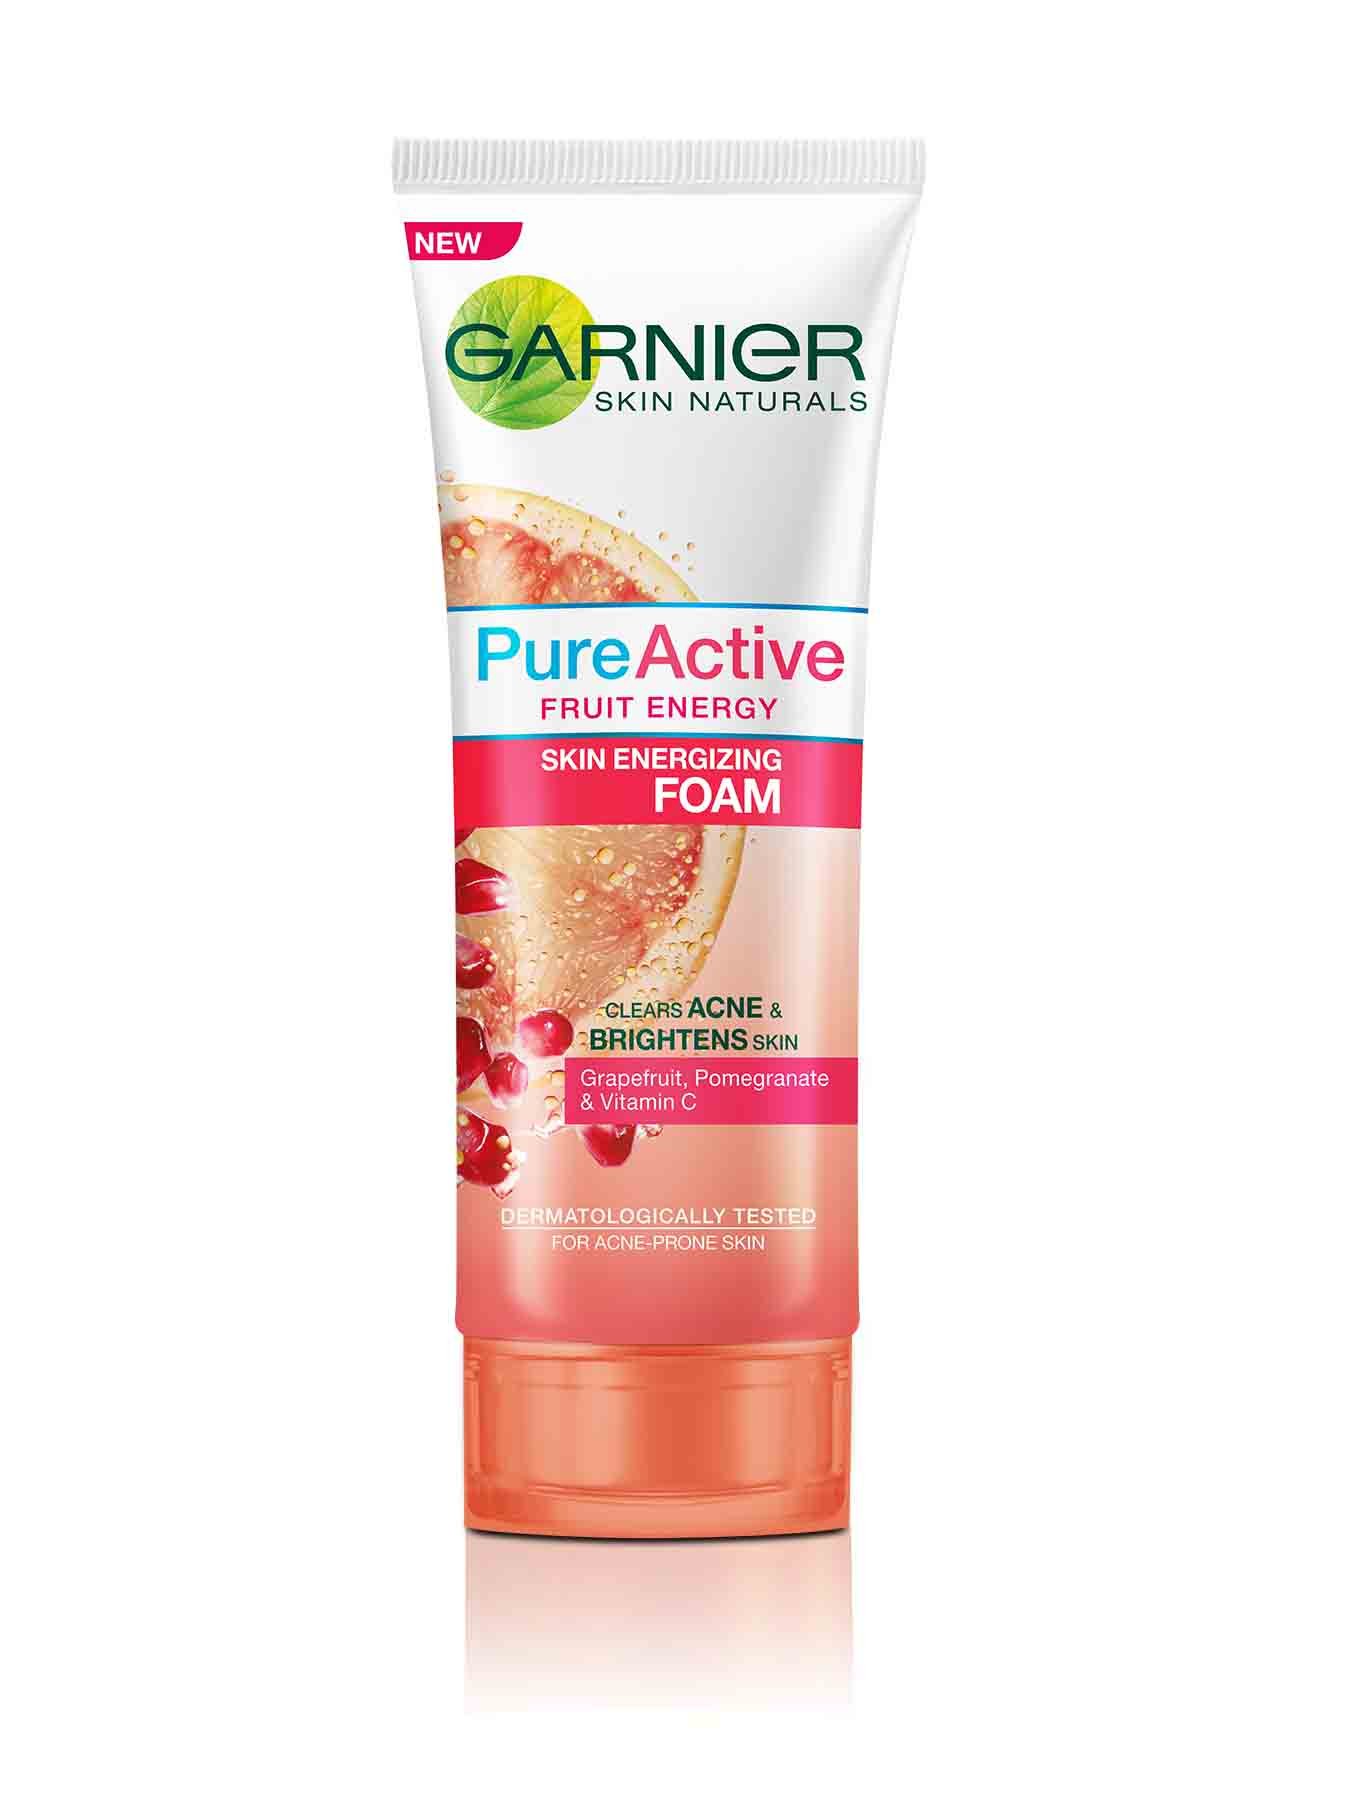 garnier pure active fruit energy foam